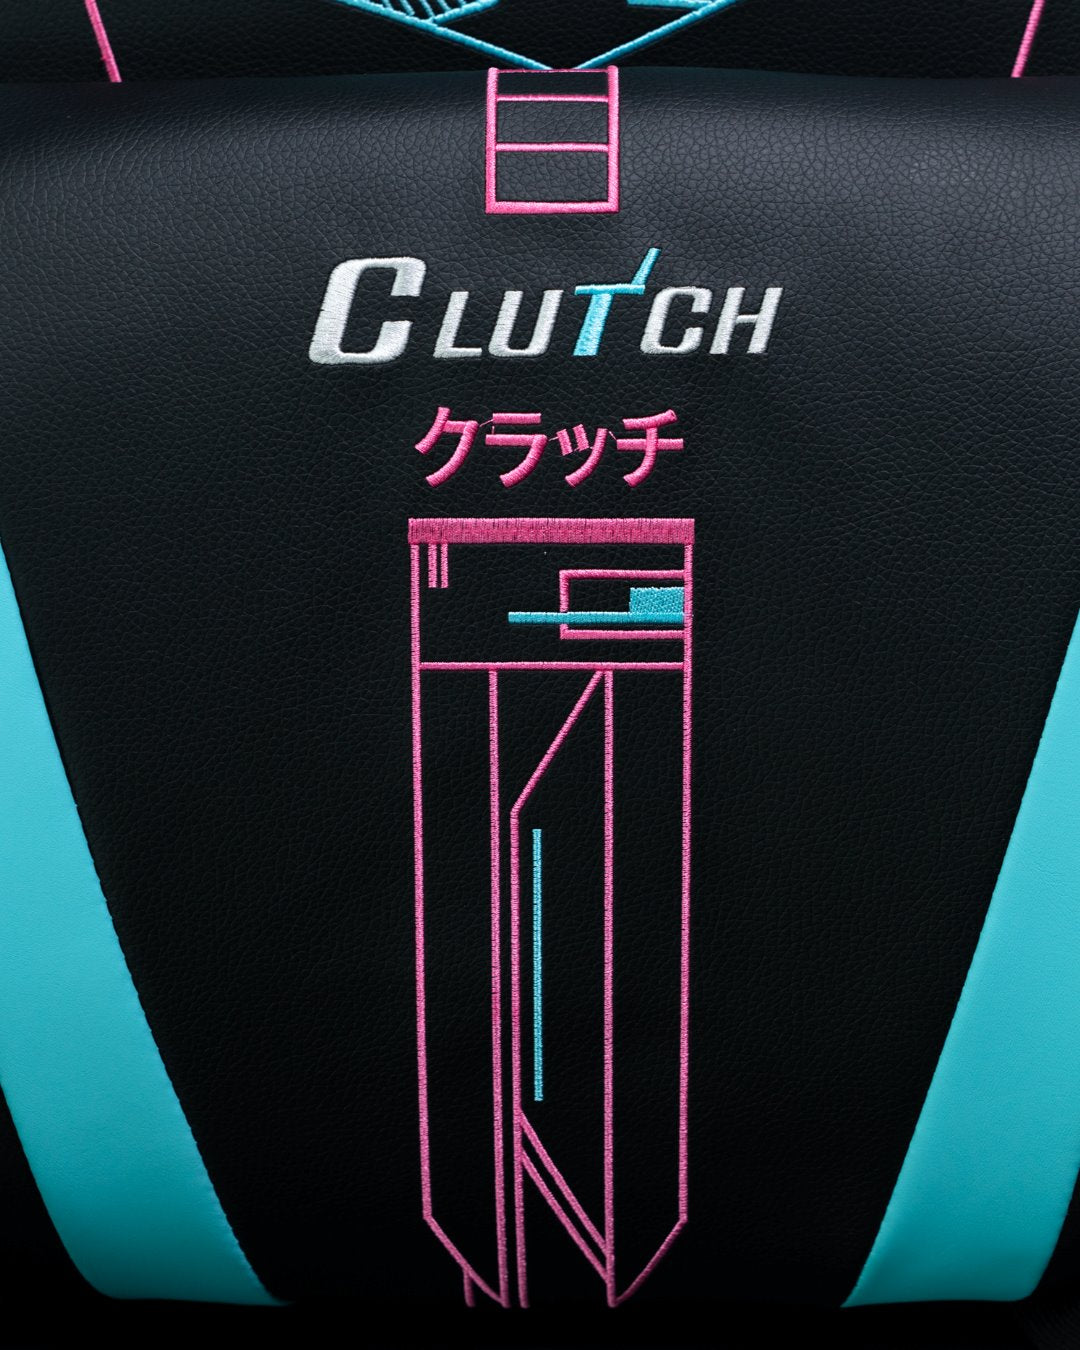 Cyber Chair - Throttle Series (Large-XL) Clutch Chairz 